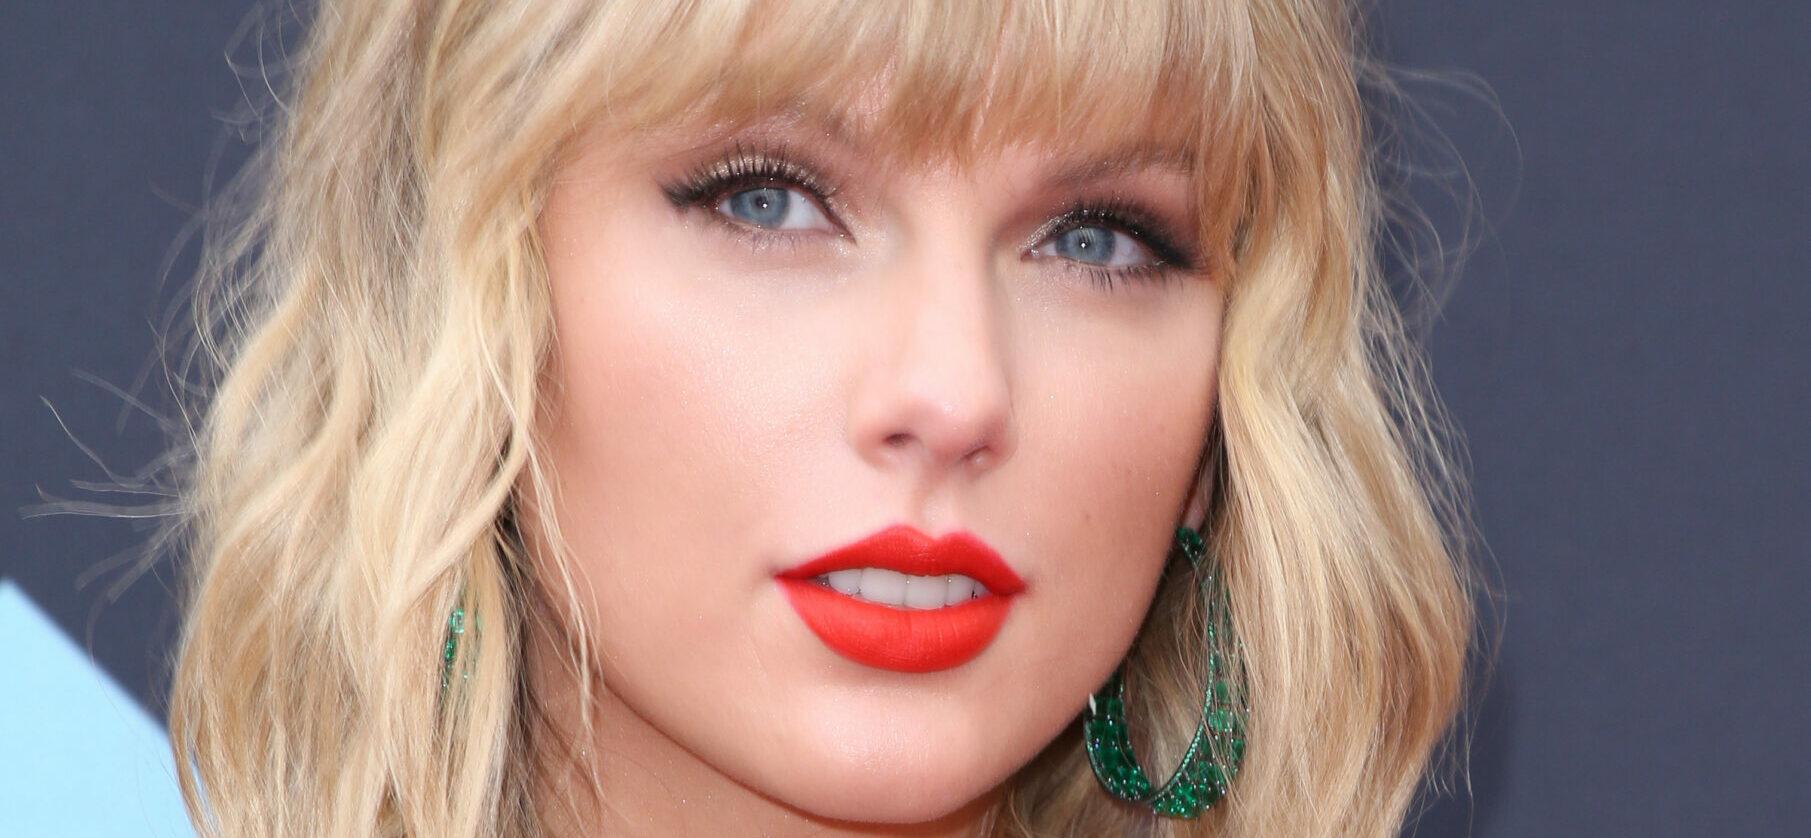 Shania Twain Has No ‘Bad Blood’ With Taylor Swift!